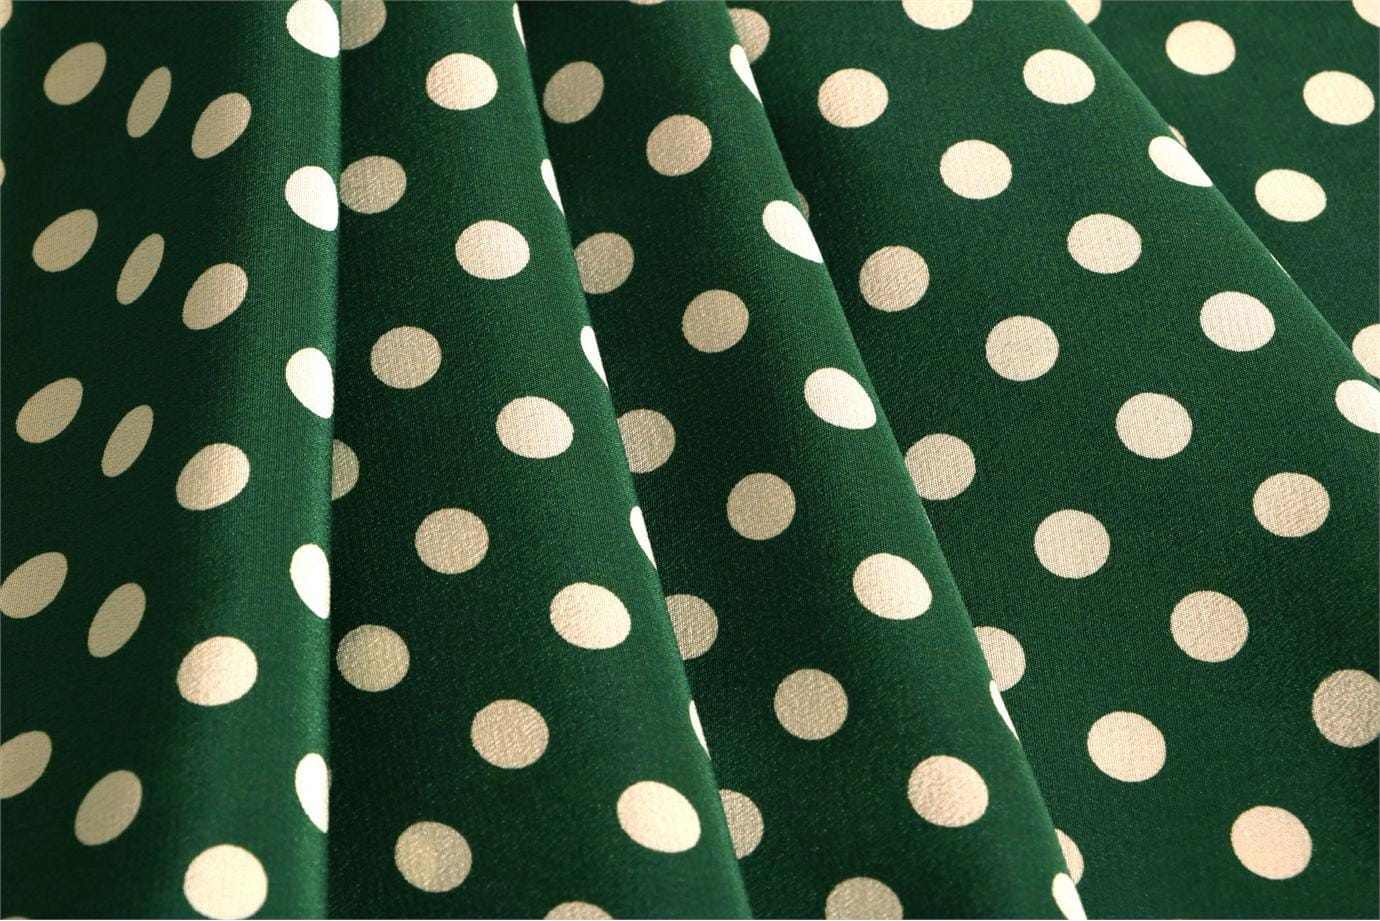 Green, White Silk Polka Dot Fabric - Crepe Se Omnibus Pois 201604